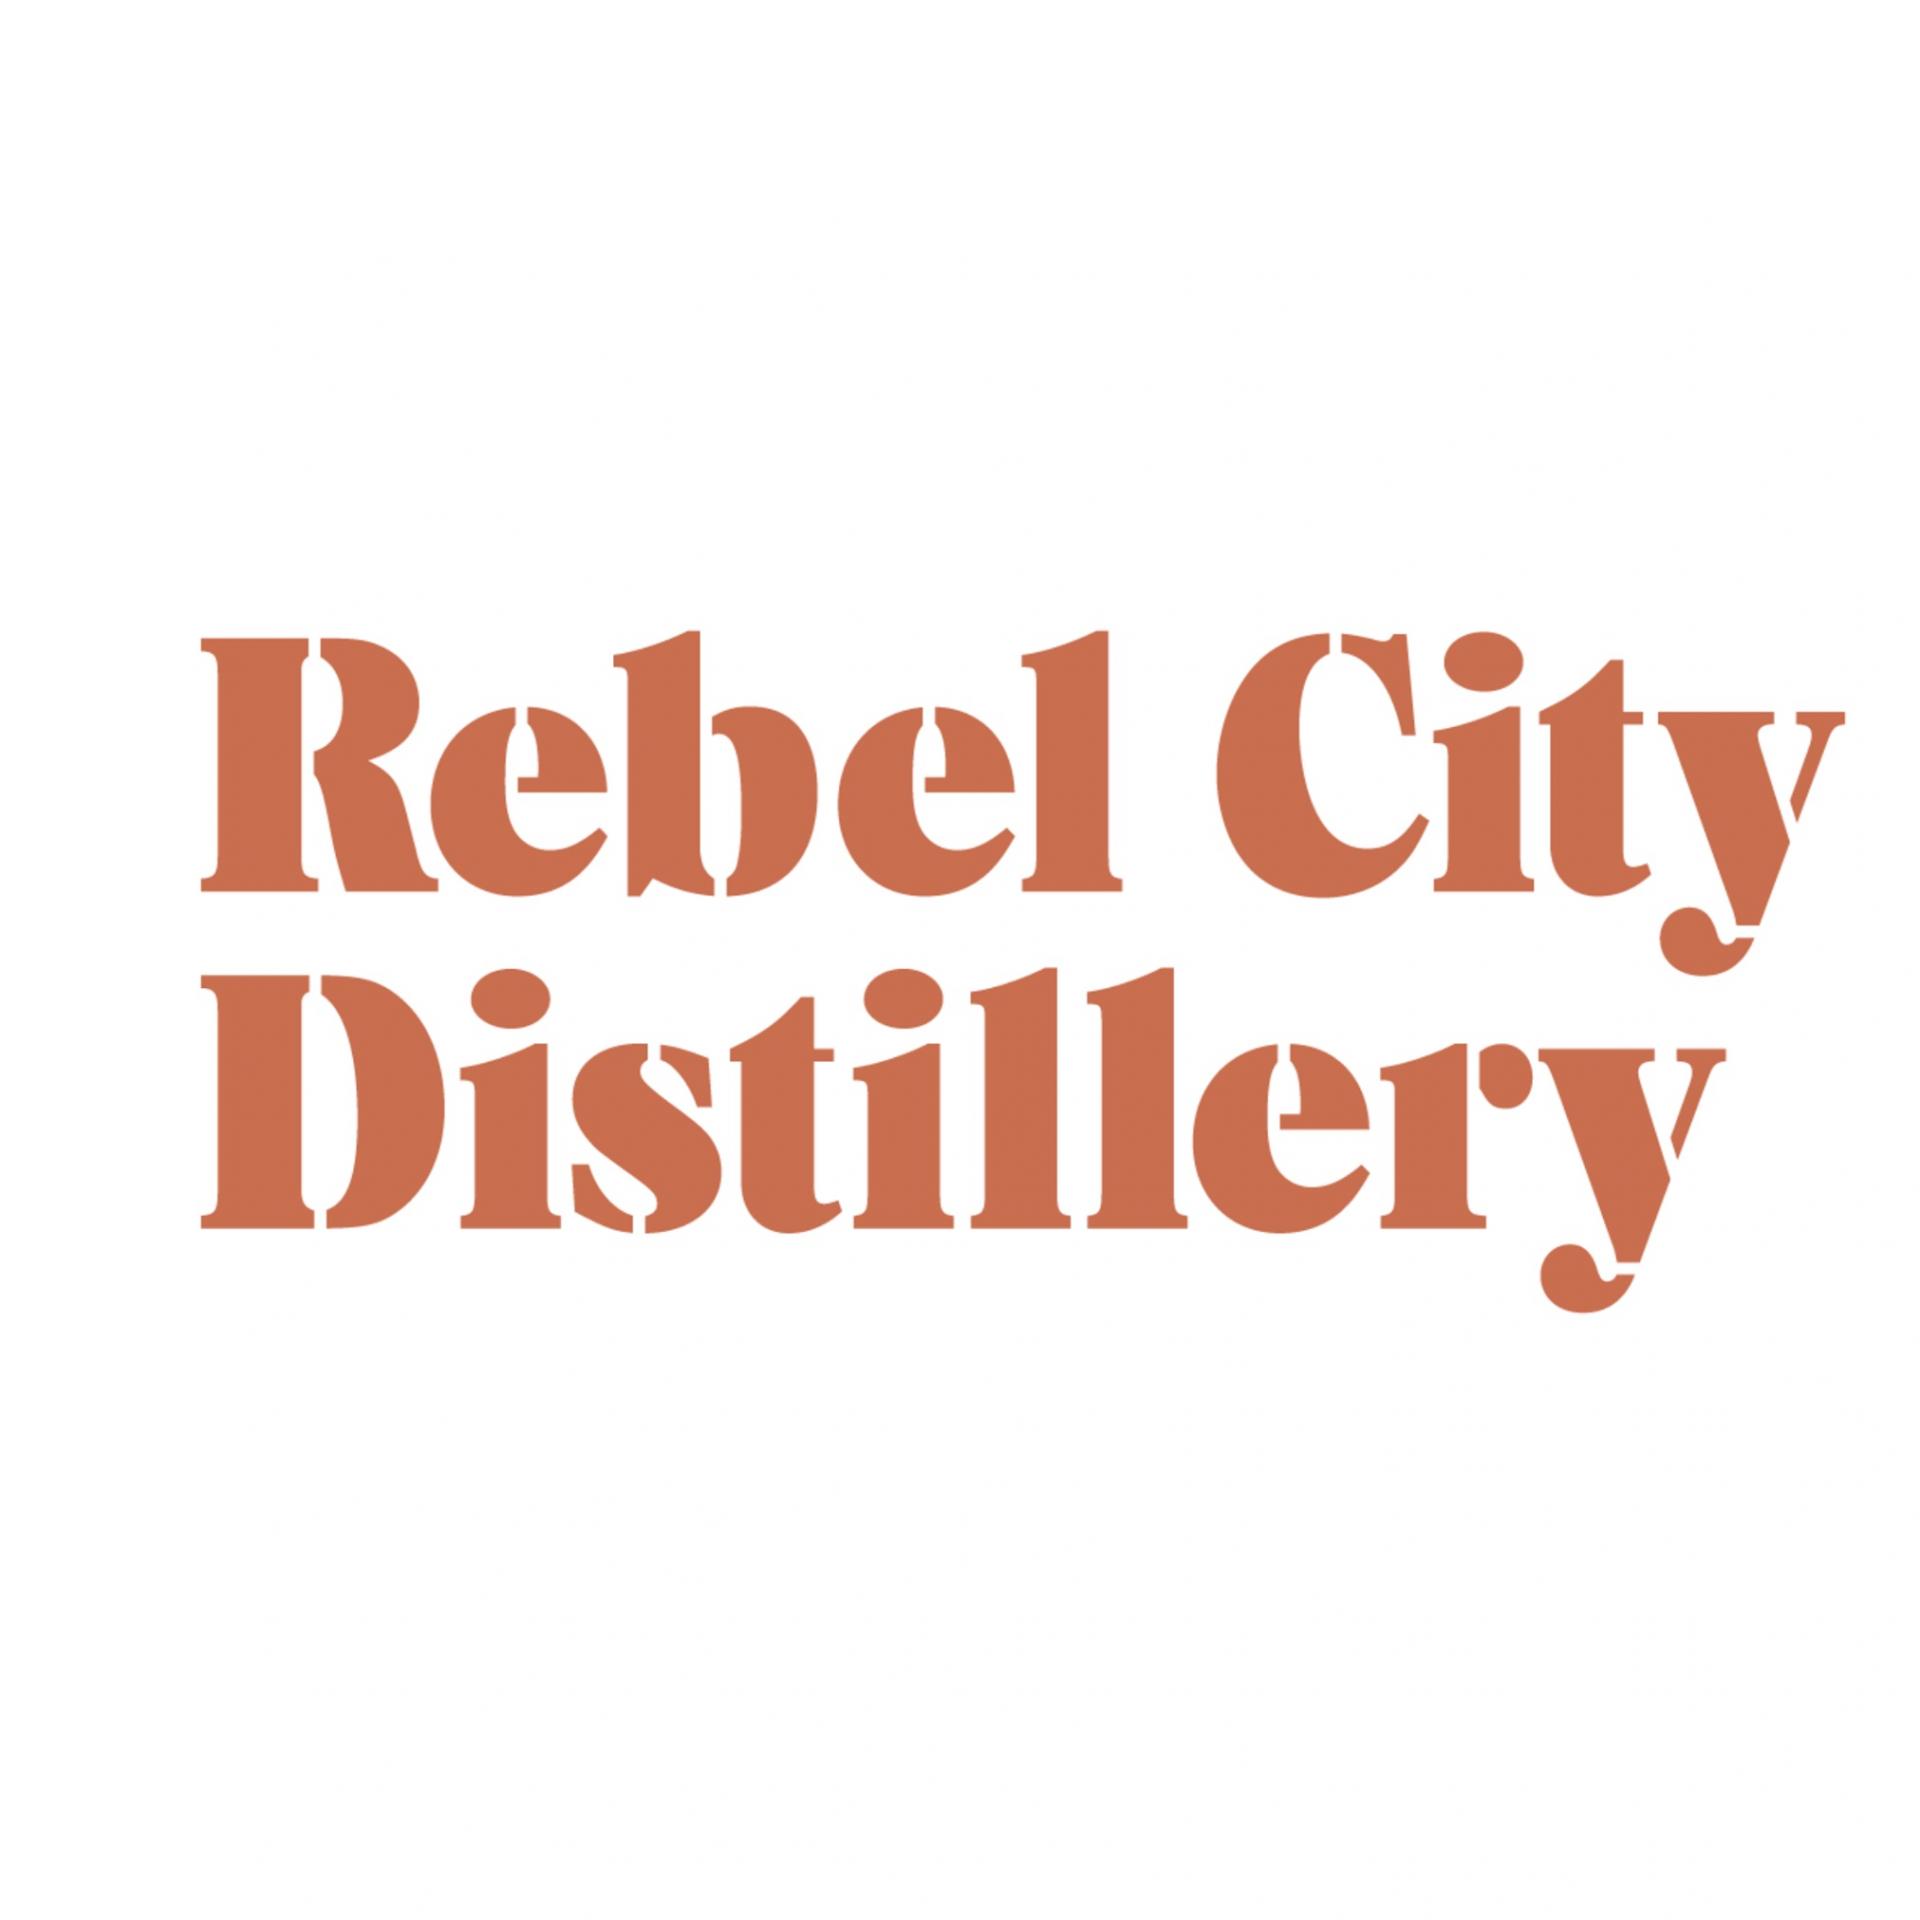 Rebel City Distillery